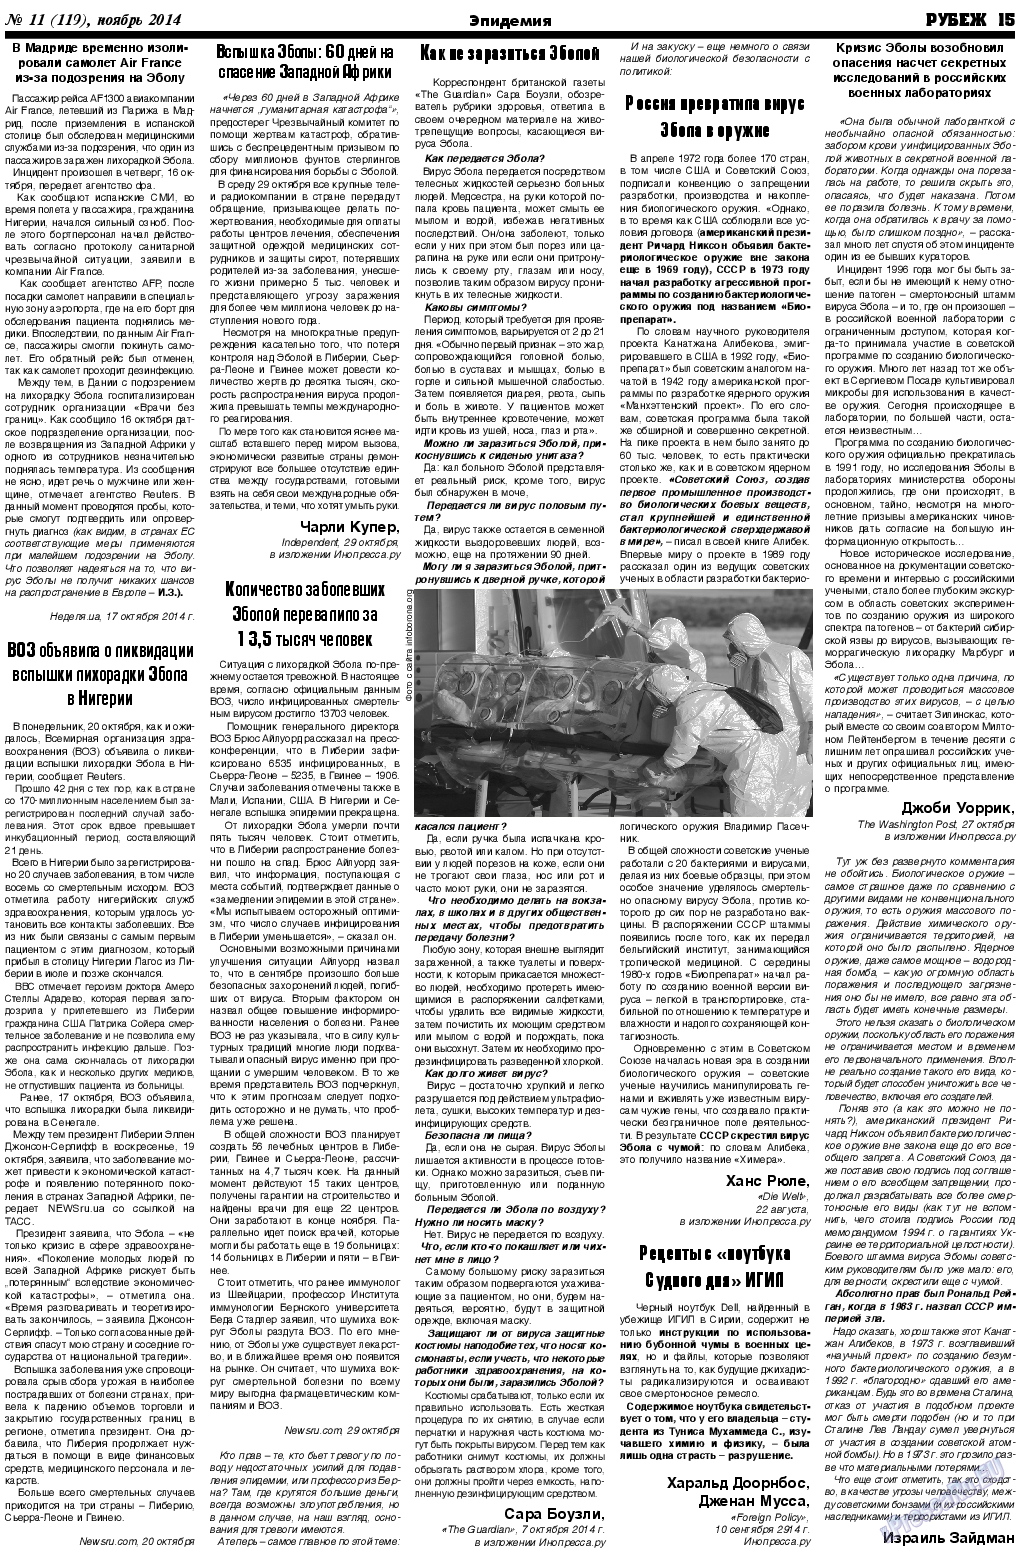 Рубеж, газета. 2014 №11 стр.15